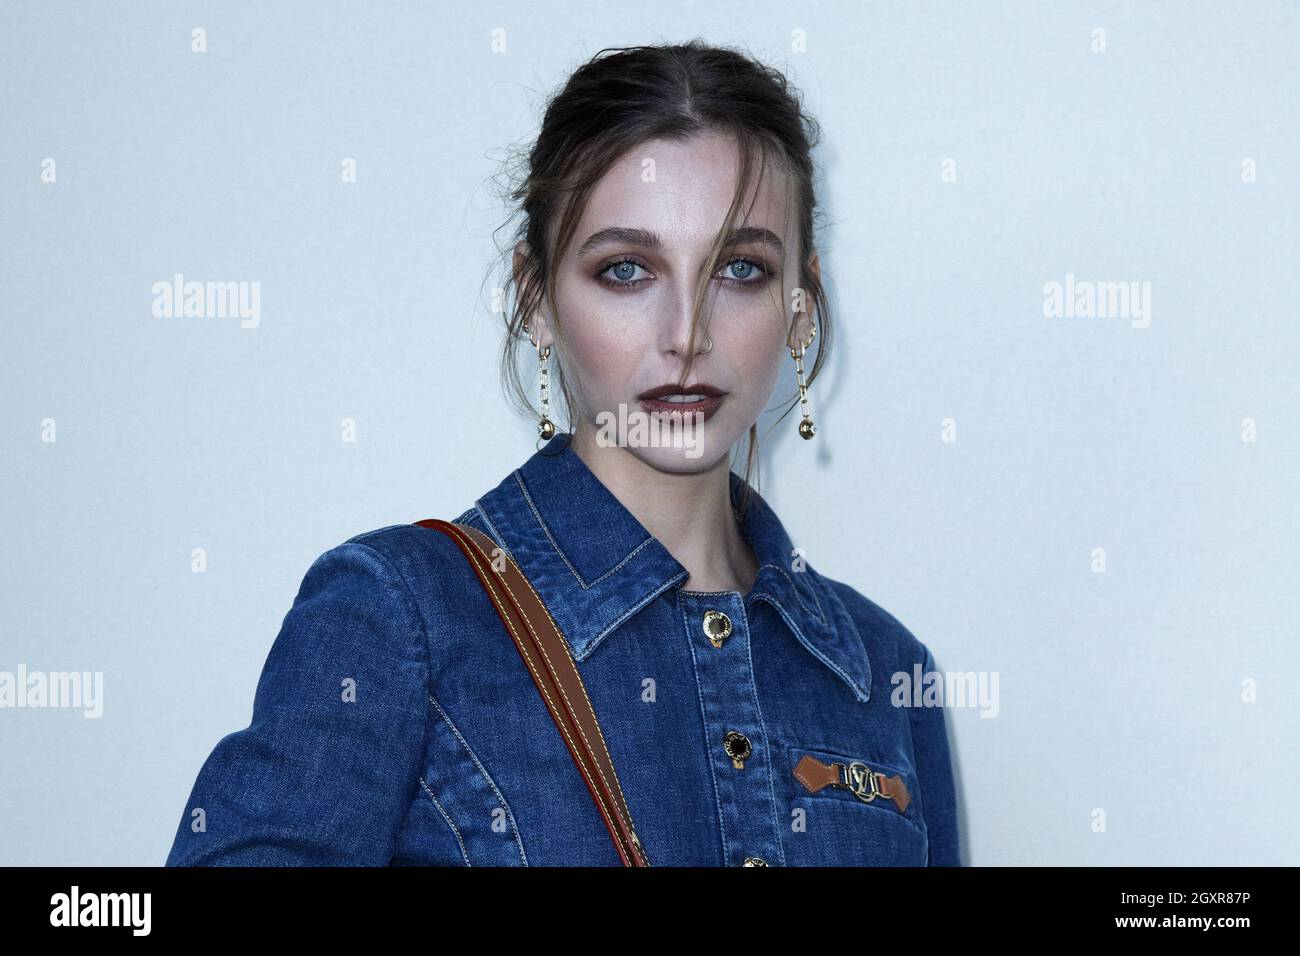 Emma Chamberlain attends the Louis Vuitton Womenswear Fall/Winter  Fotografía de noticias - Getty Images